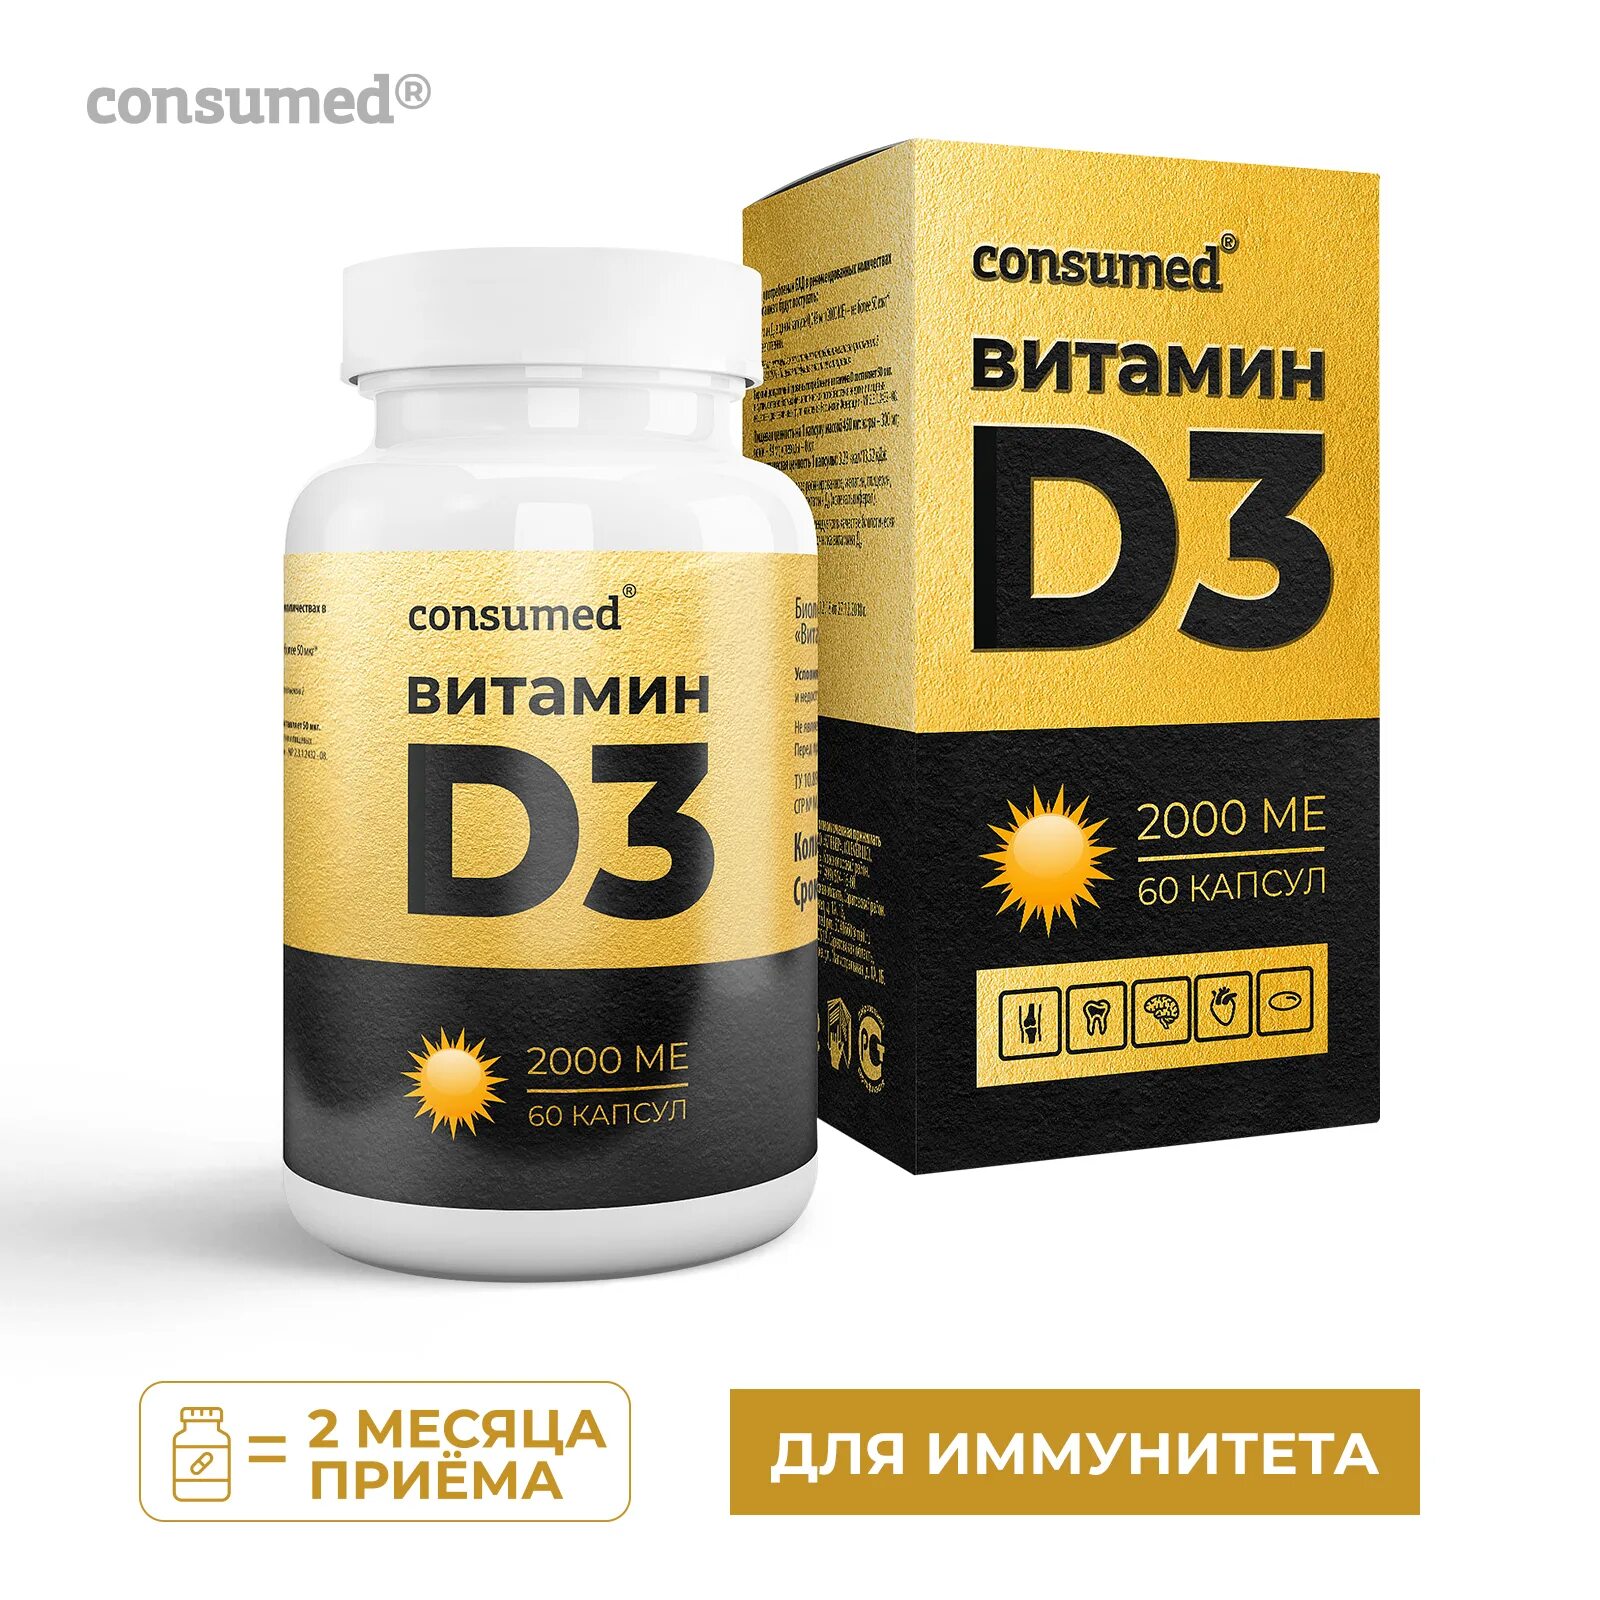 Детримакс витамин д3 4000. Витамин д3 2000ме (Vitamin d3 2000) consumed (холекальциферол). Витамин д3 капс 2000ме. Витамин д3 2000ме 60 капсул.